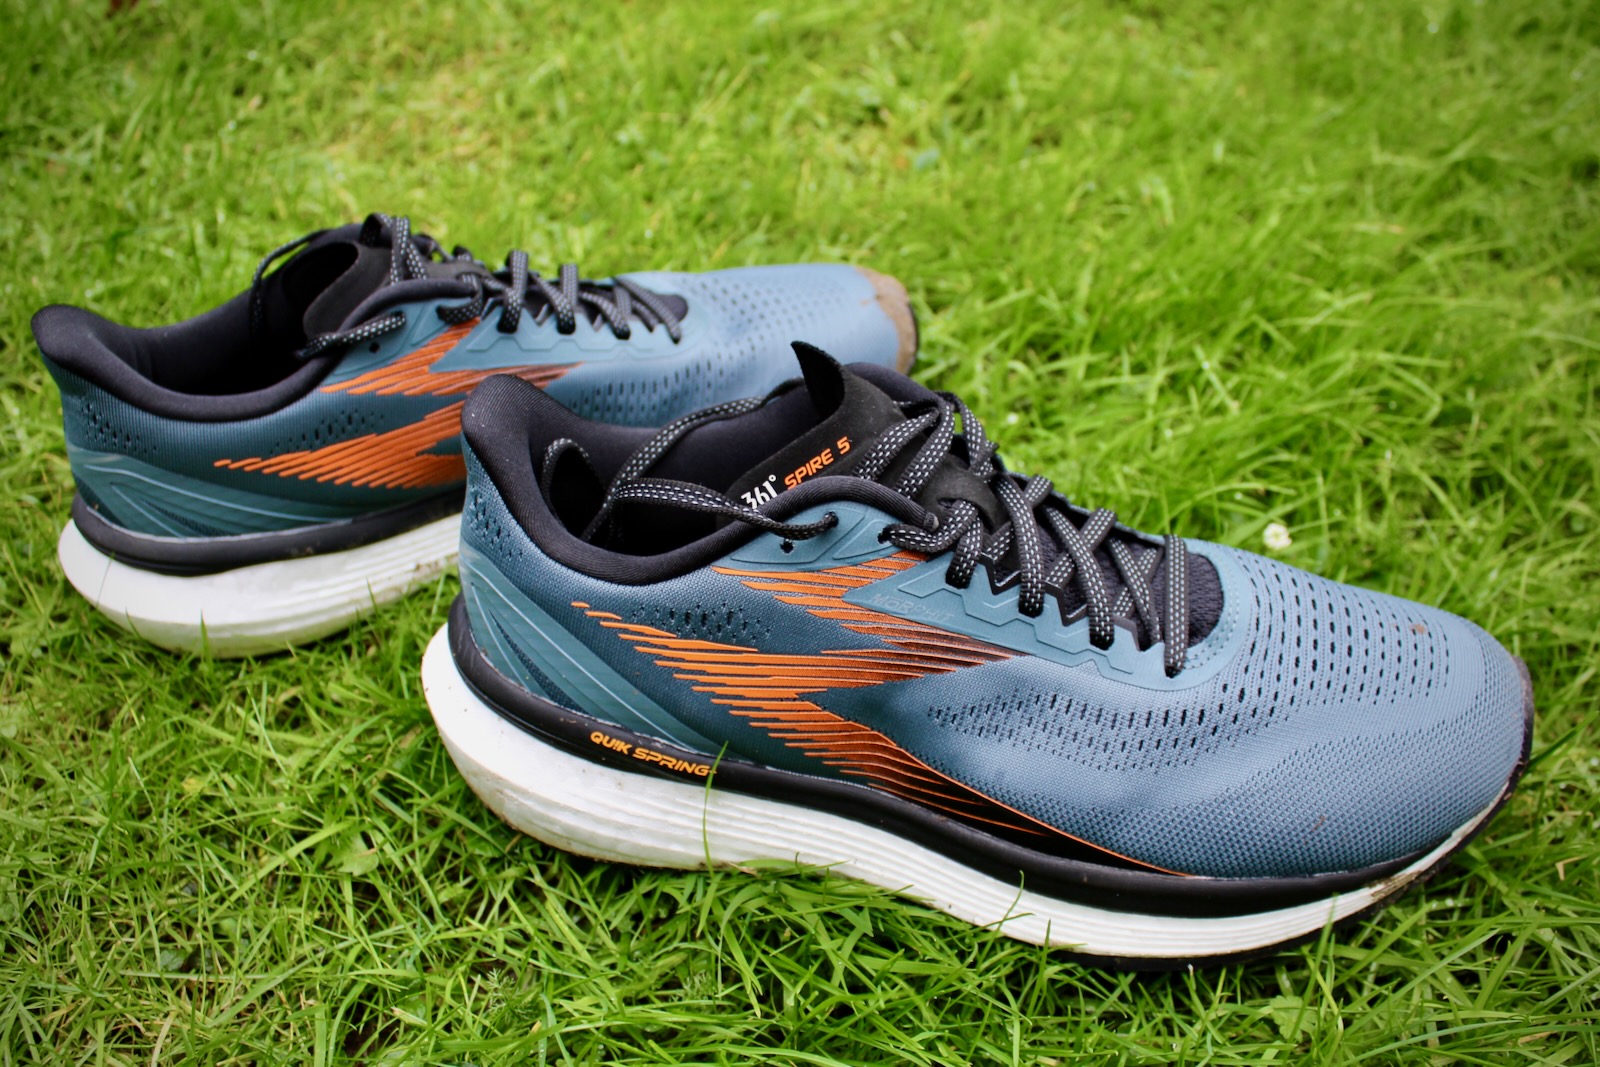 Kit Focus – 361° Spire 5 Endurance Running Shoes